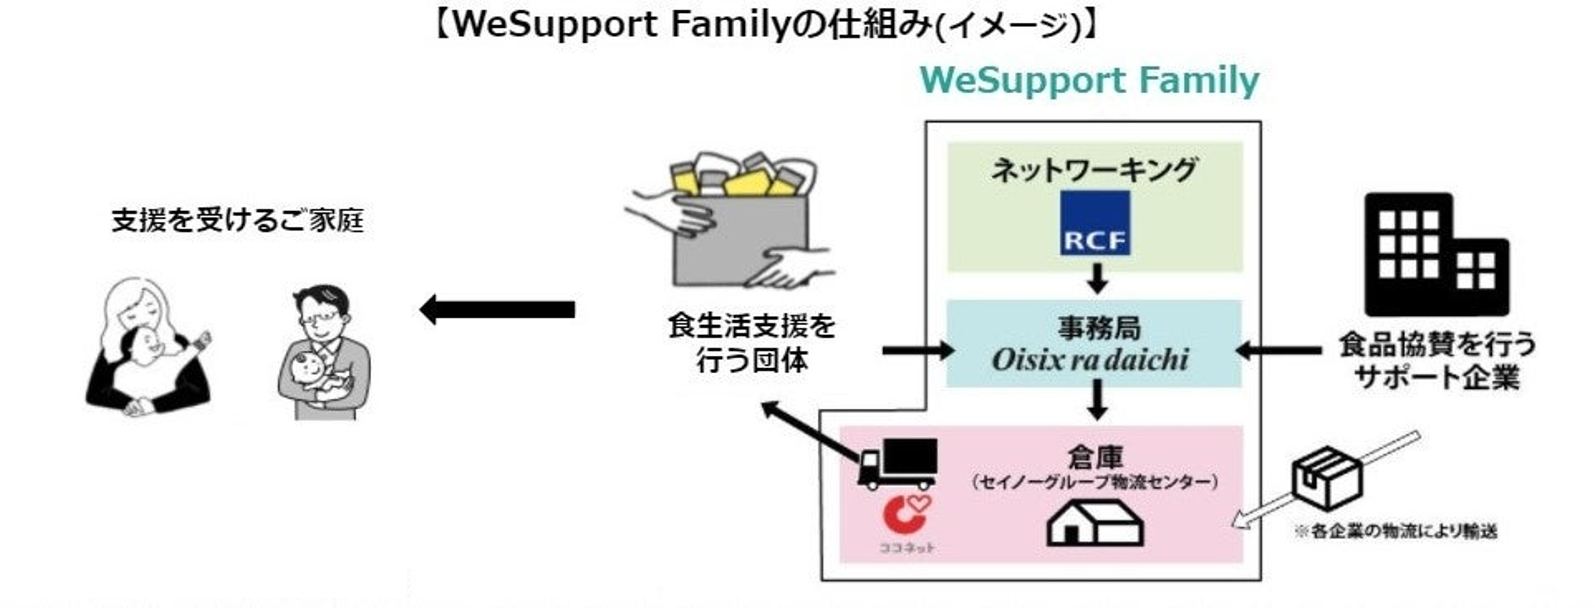 WeSupport Family 仕組みのイメージ